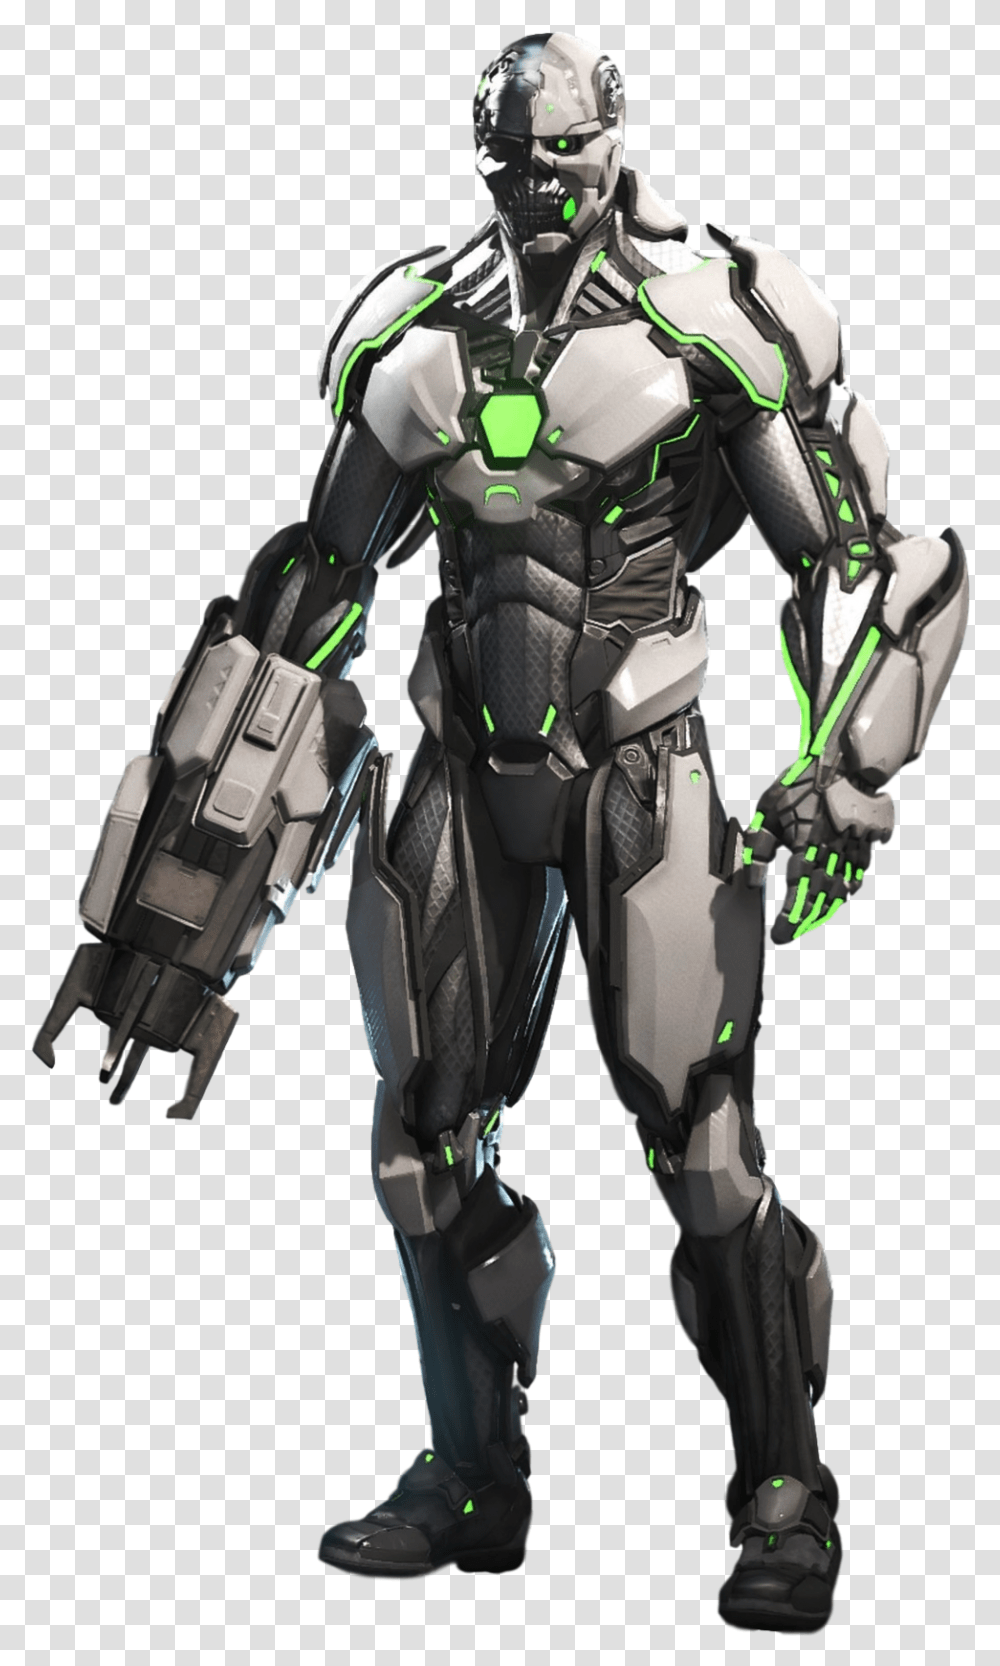 Injustice 2 Cyborg Green Arrow Grid Cyborg Injustice 2, Helmet, Clothing, Apparel, Robot Transparent Png